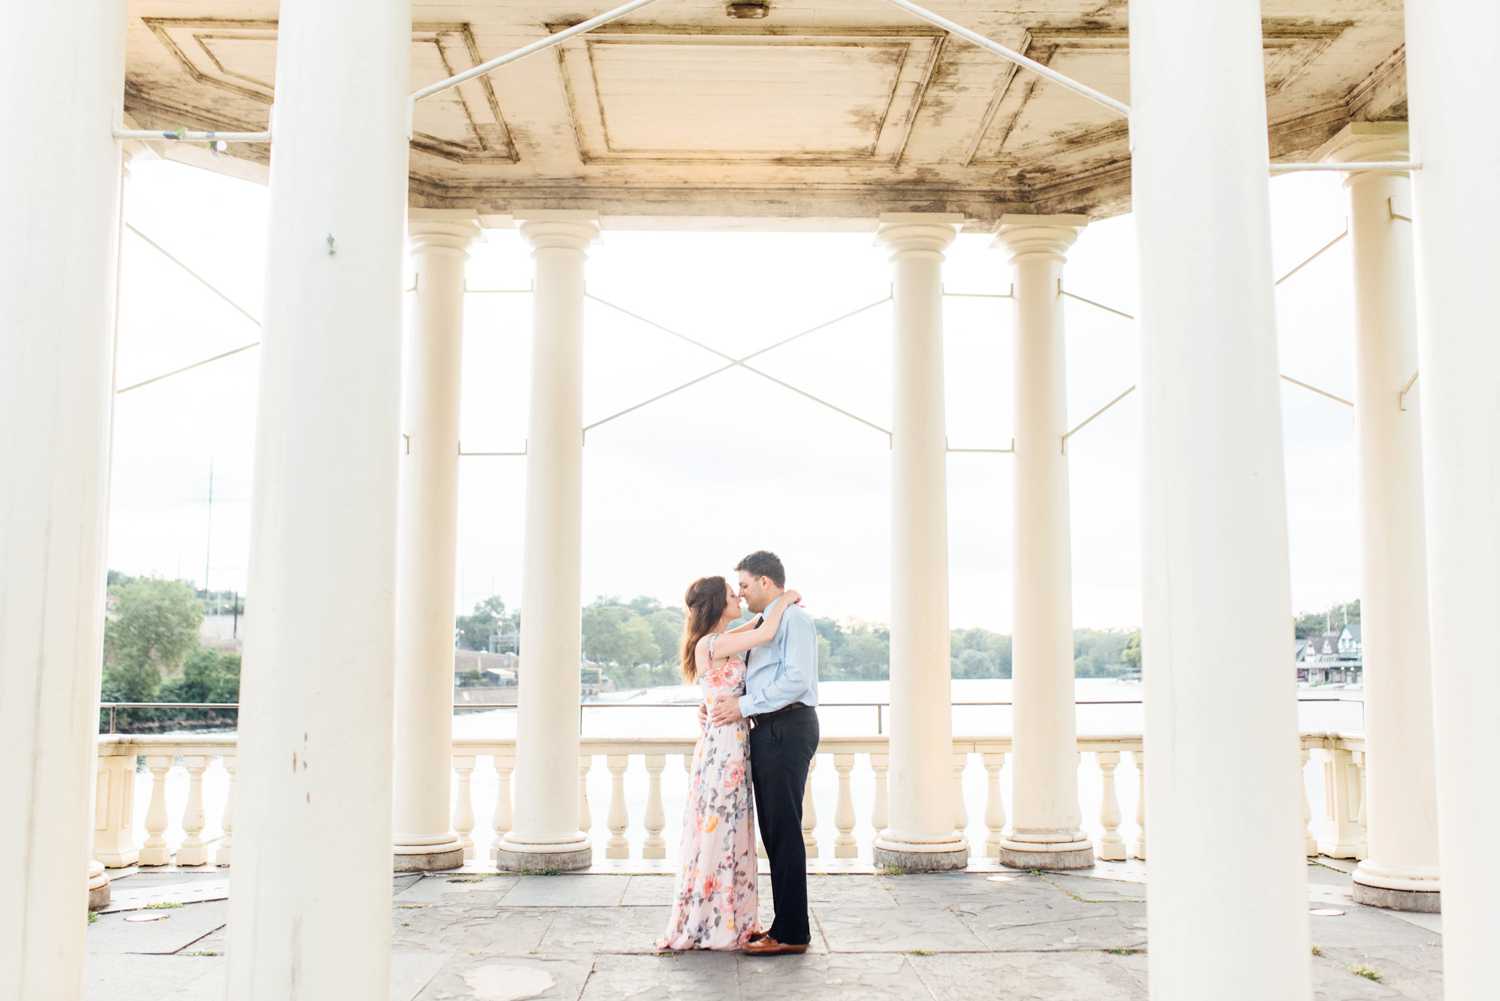 Jessica + Eyad - University of Pennsylvania and Waterworks Engagement Session - Philadelphia Wedding Photographer - Alison Dunn Photography photo